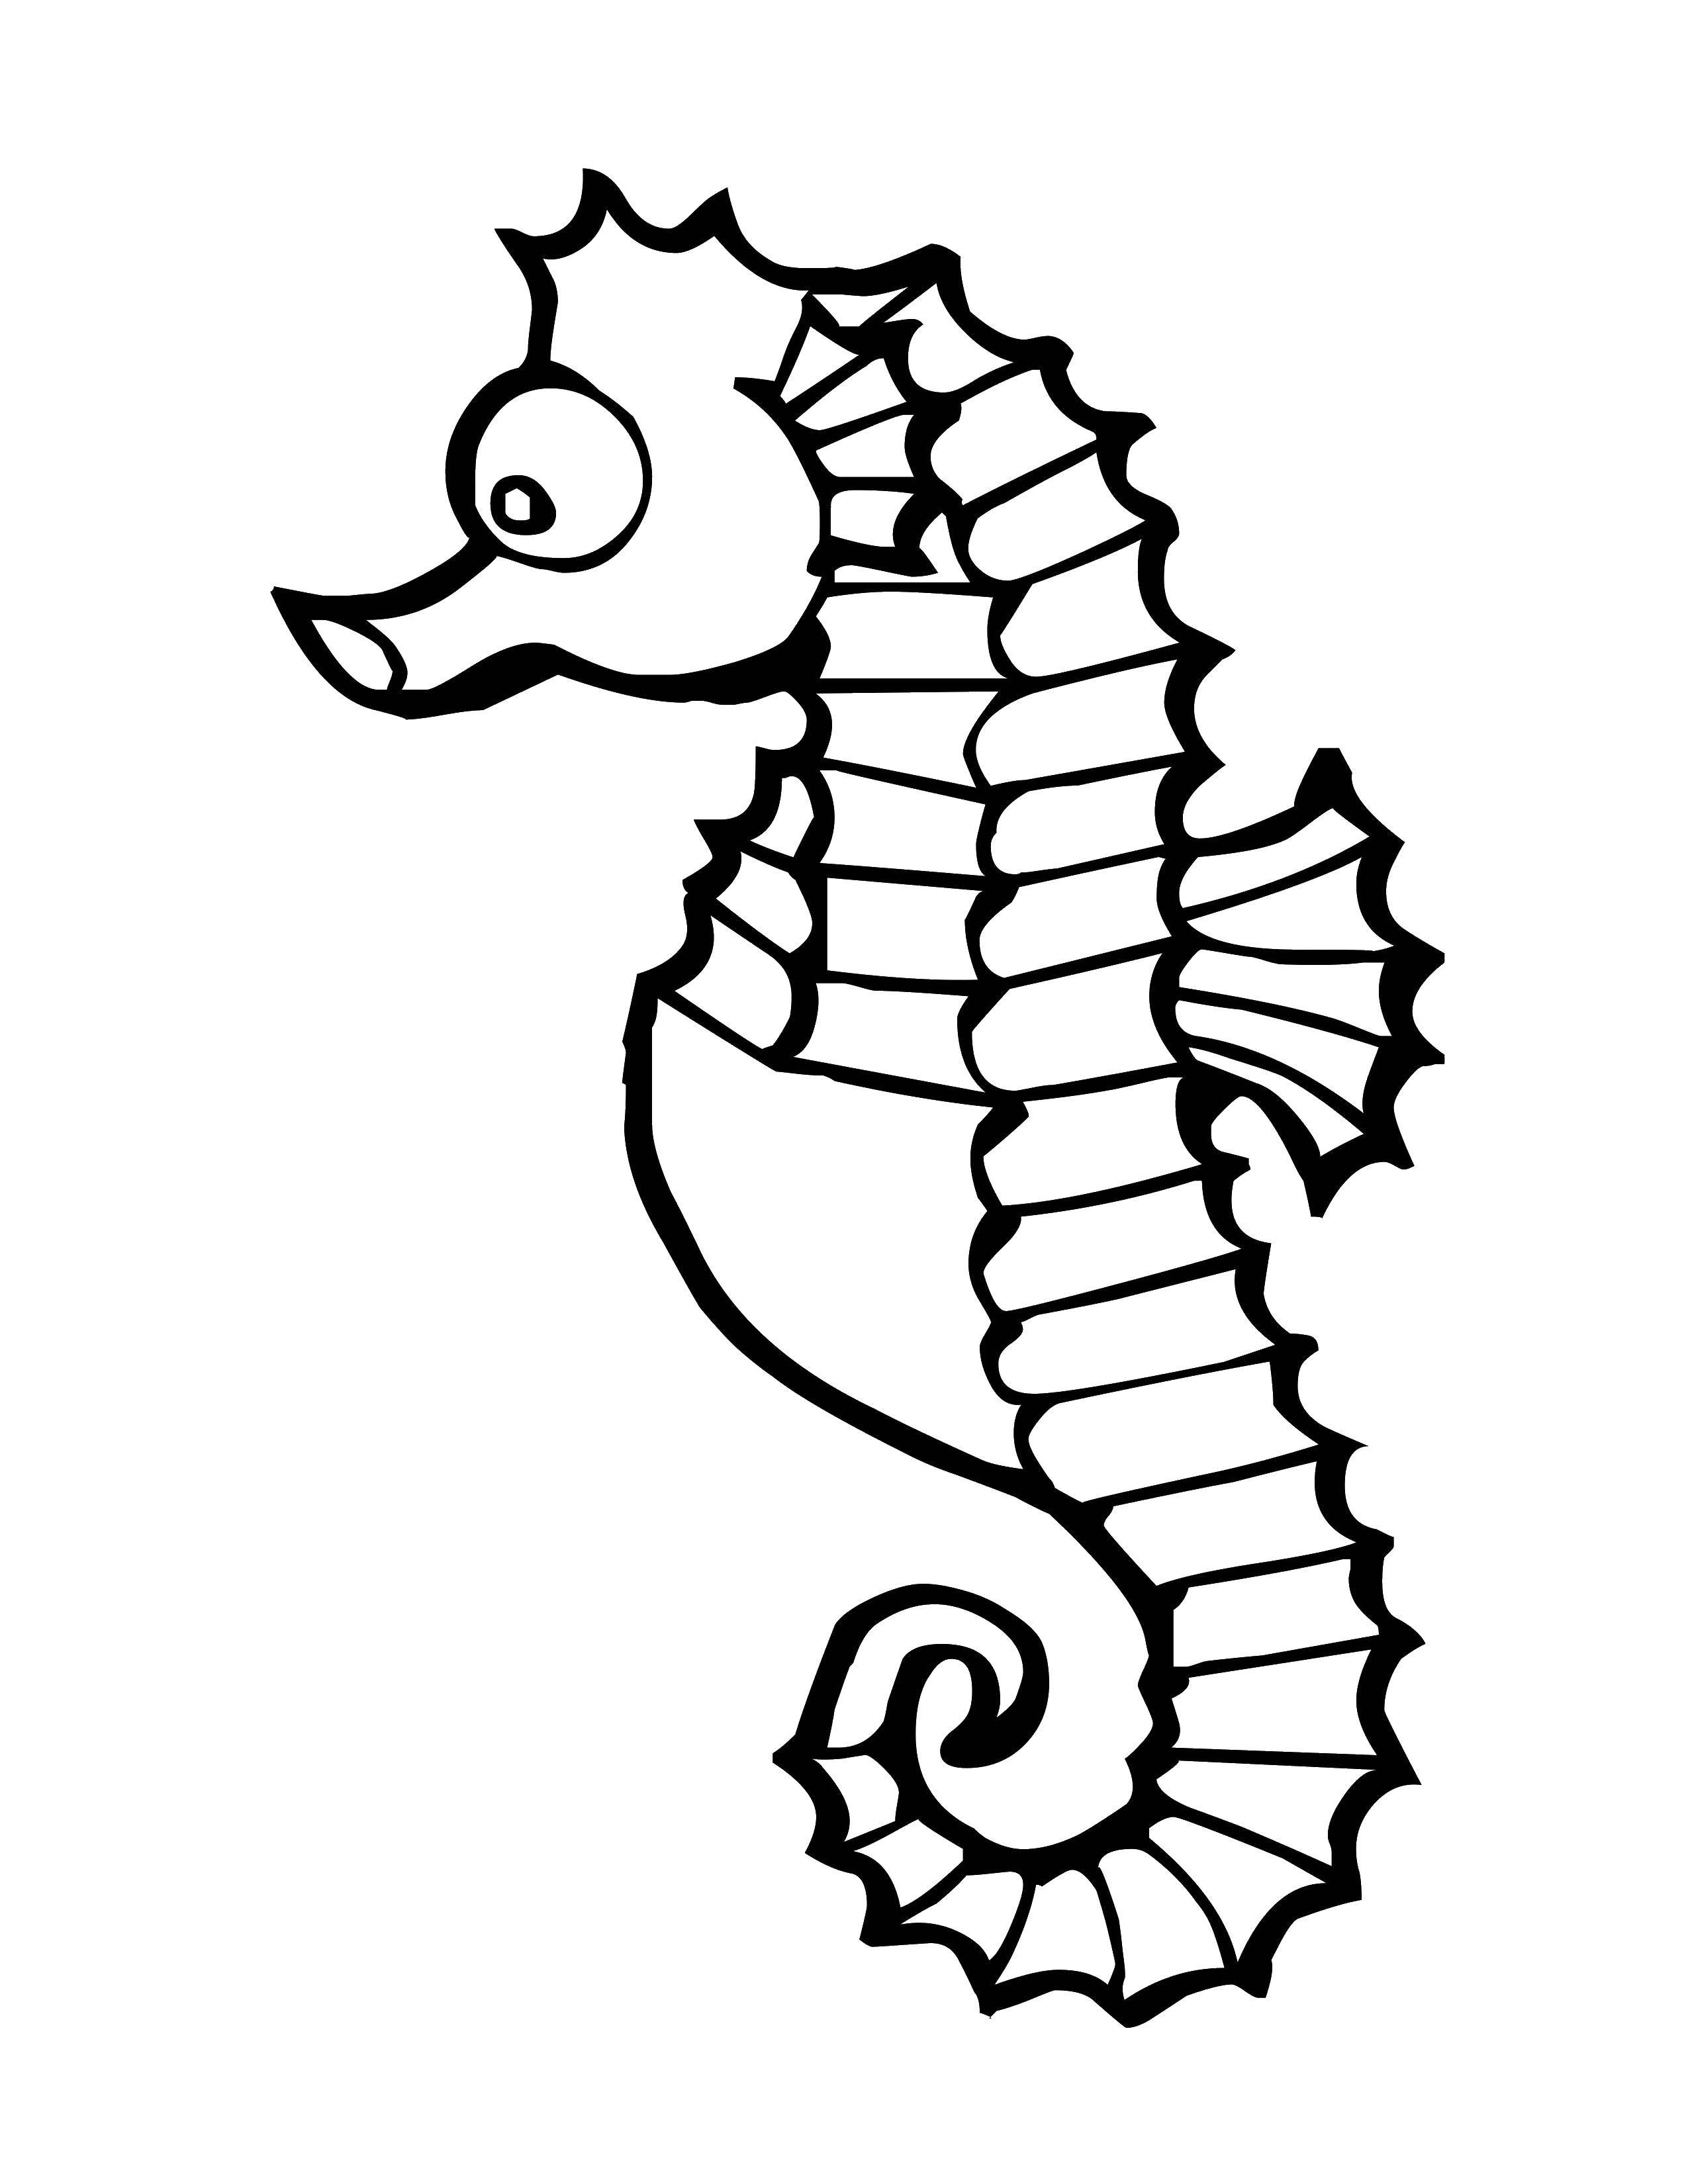 Coloring Seahorse. Category animals. Tags:  sea, water, seahorse.